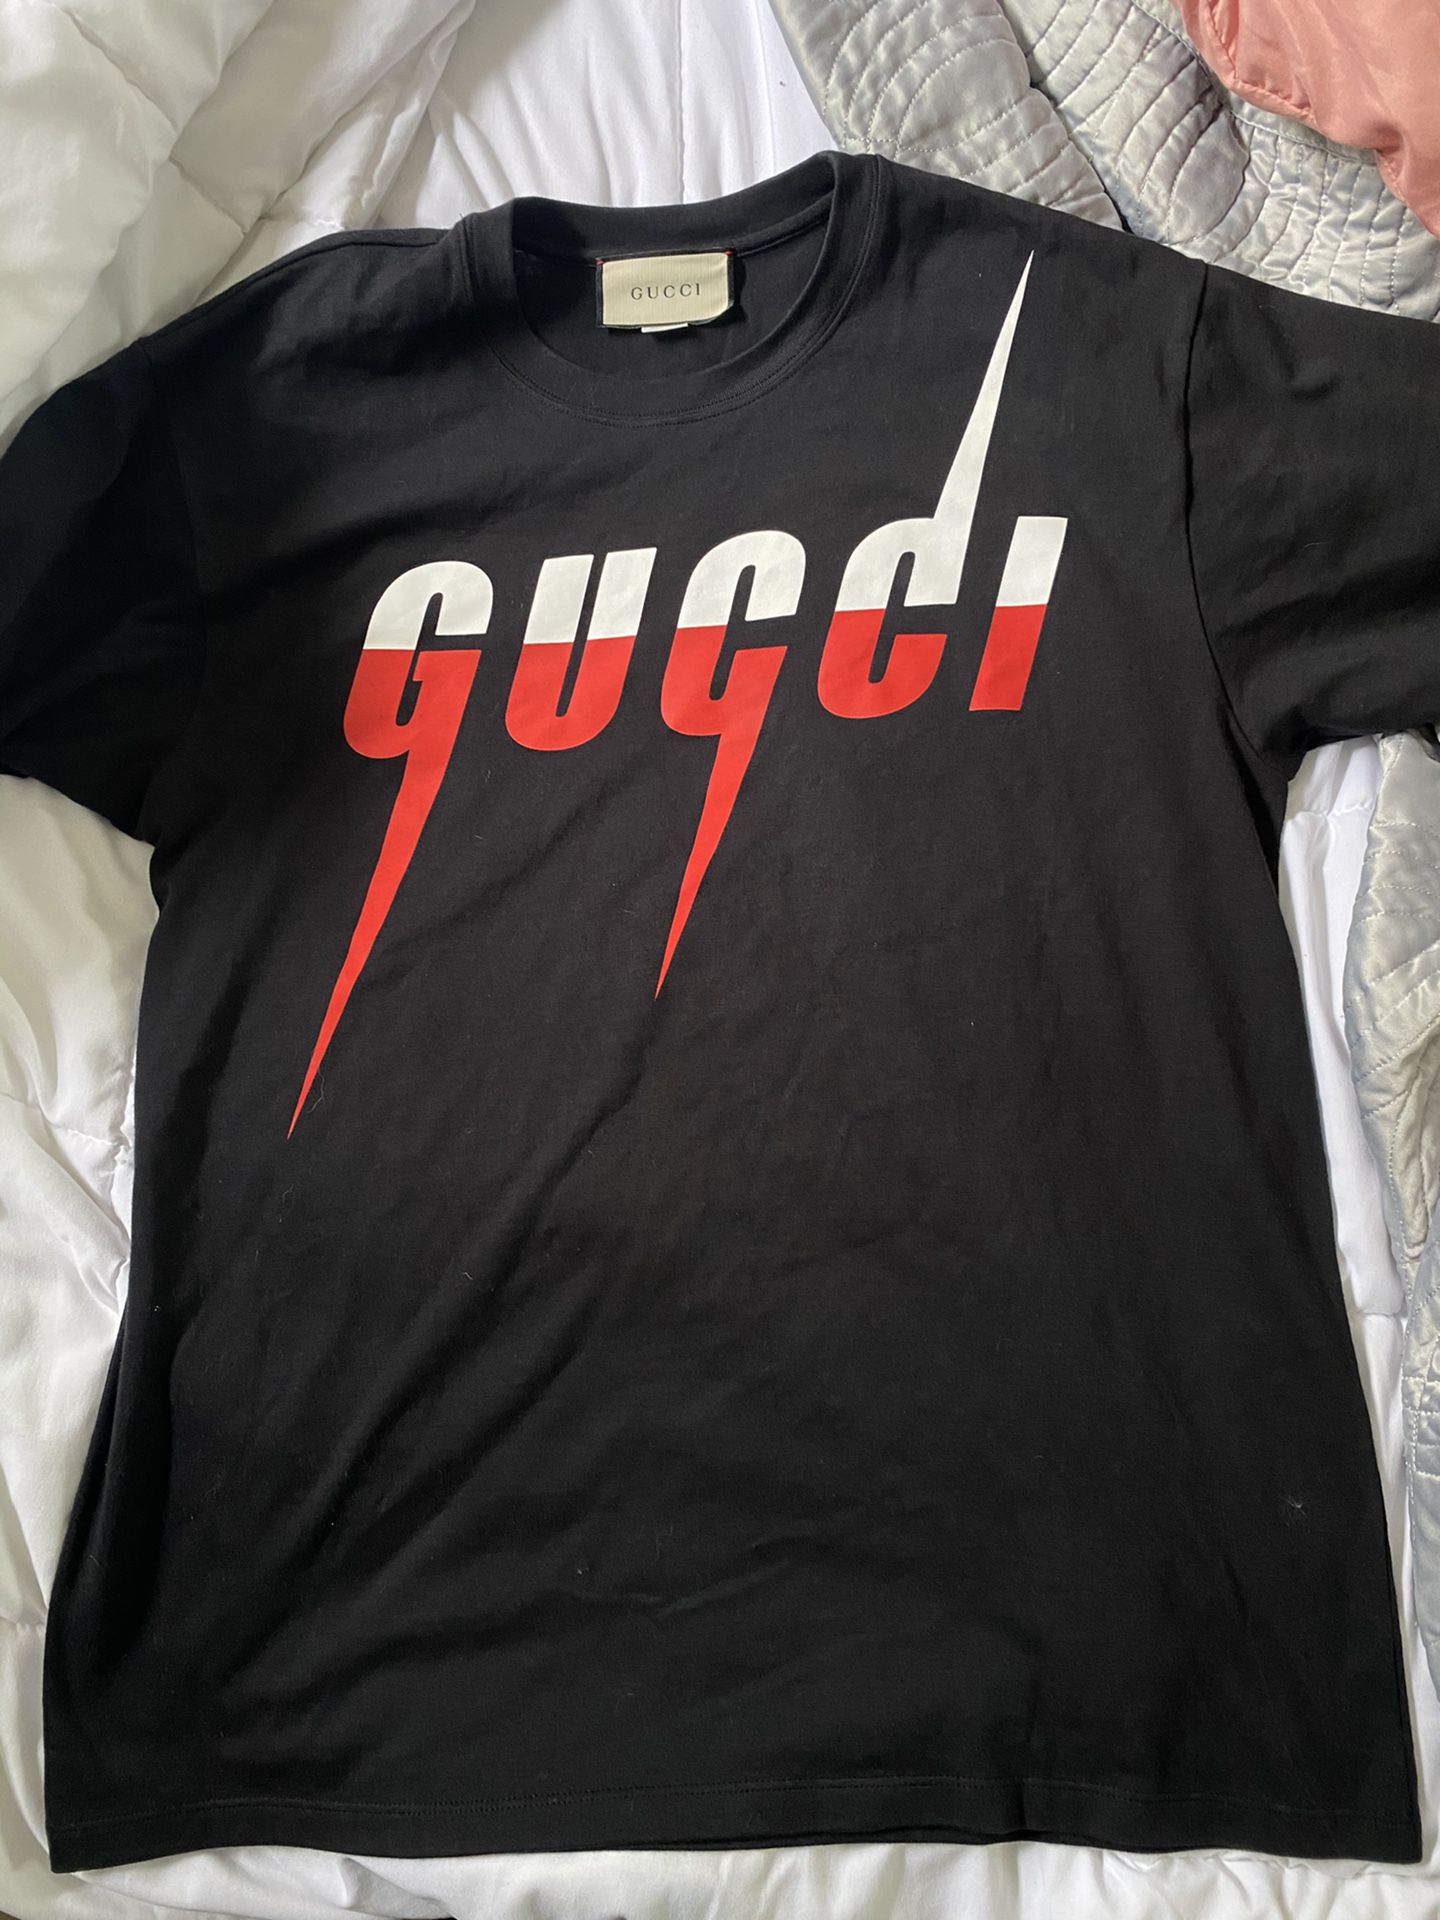 Gucci blade t-shirt